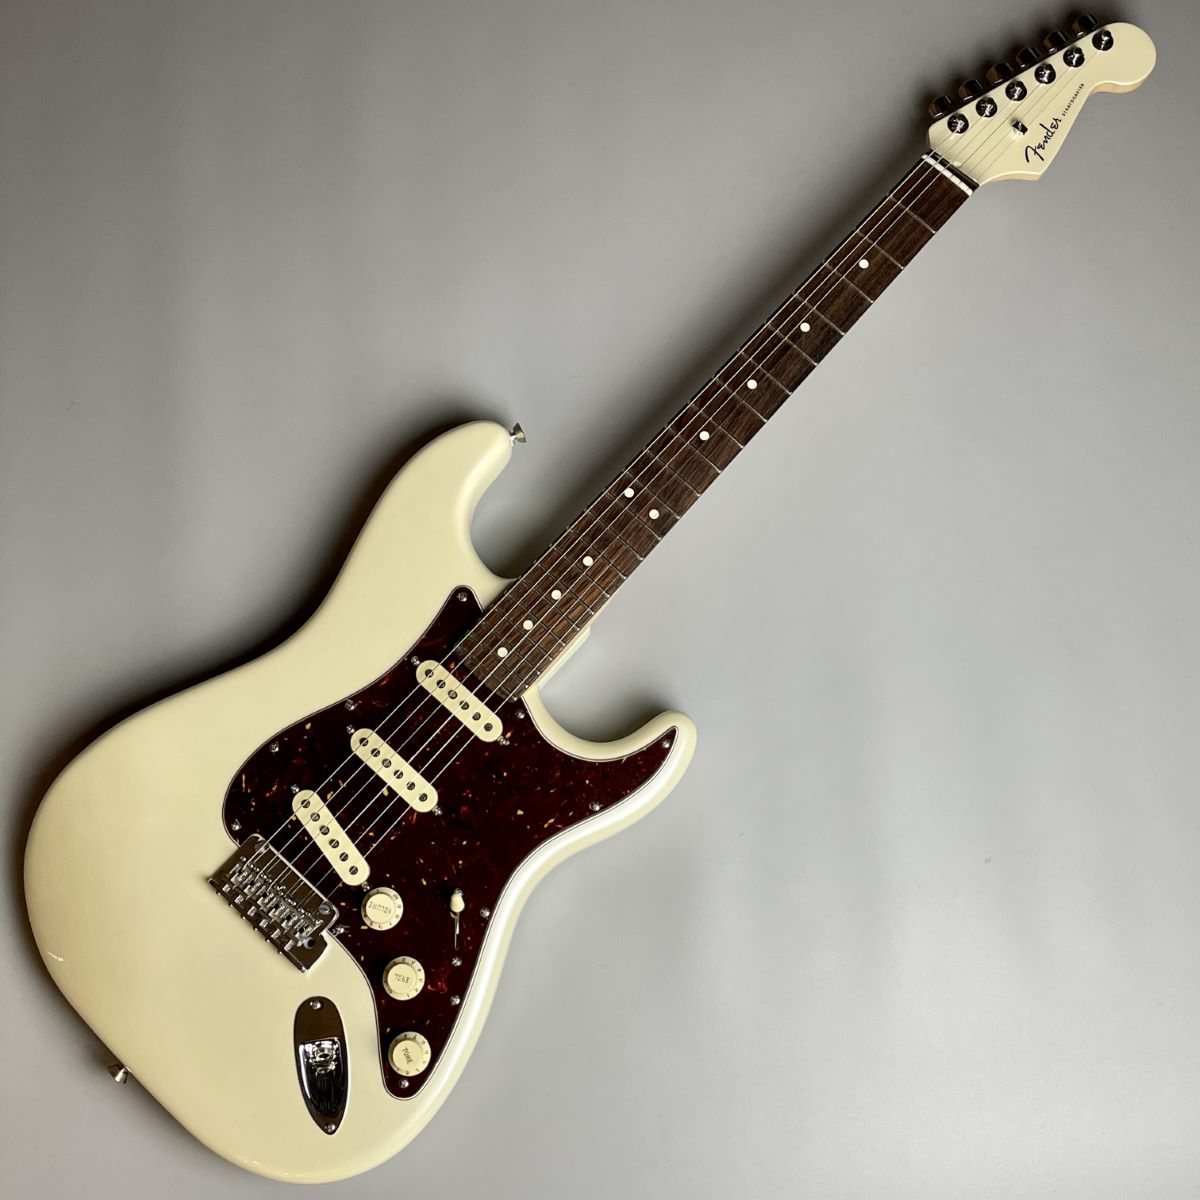 Fender American Showcase Stratocaster【現物写真】【当社独占販売